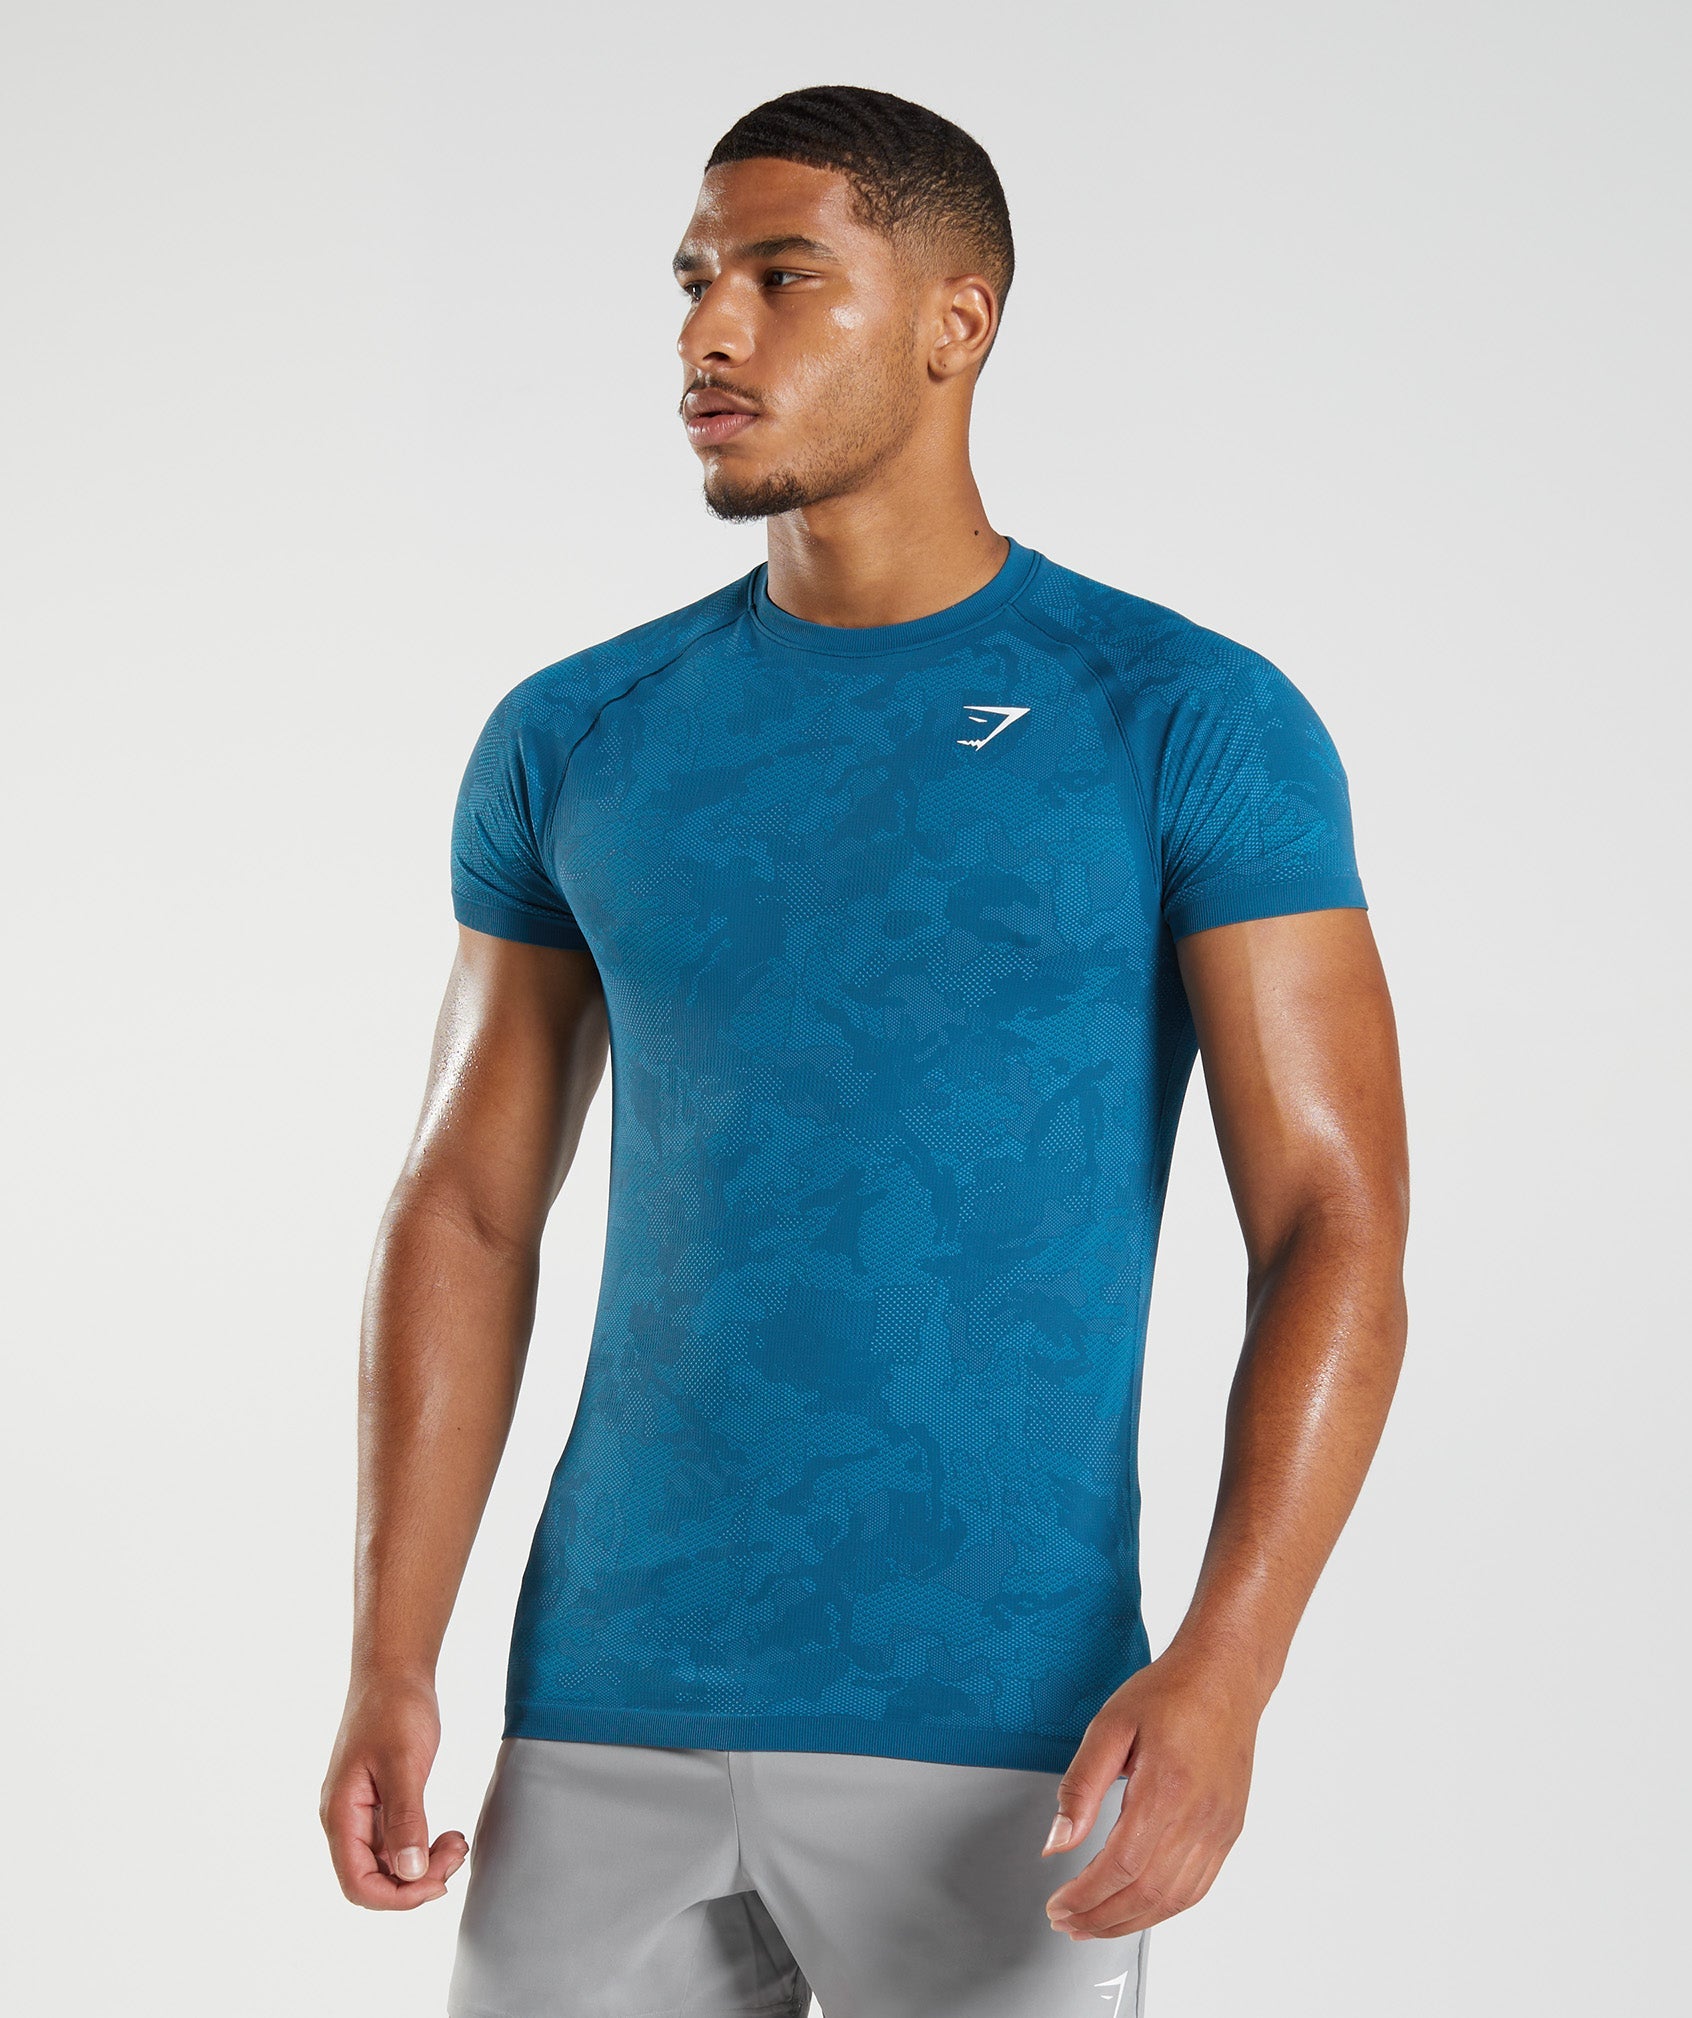 Geo Seamless T-Shirt in Atlantic Blue/Shark Blue